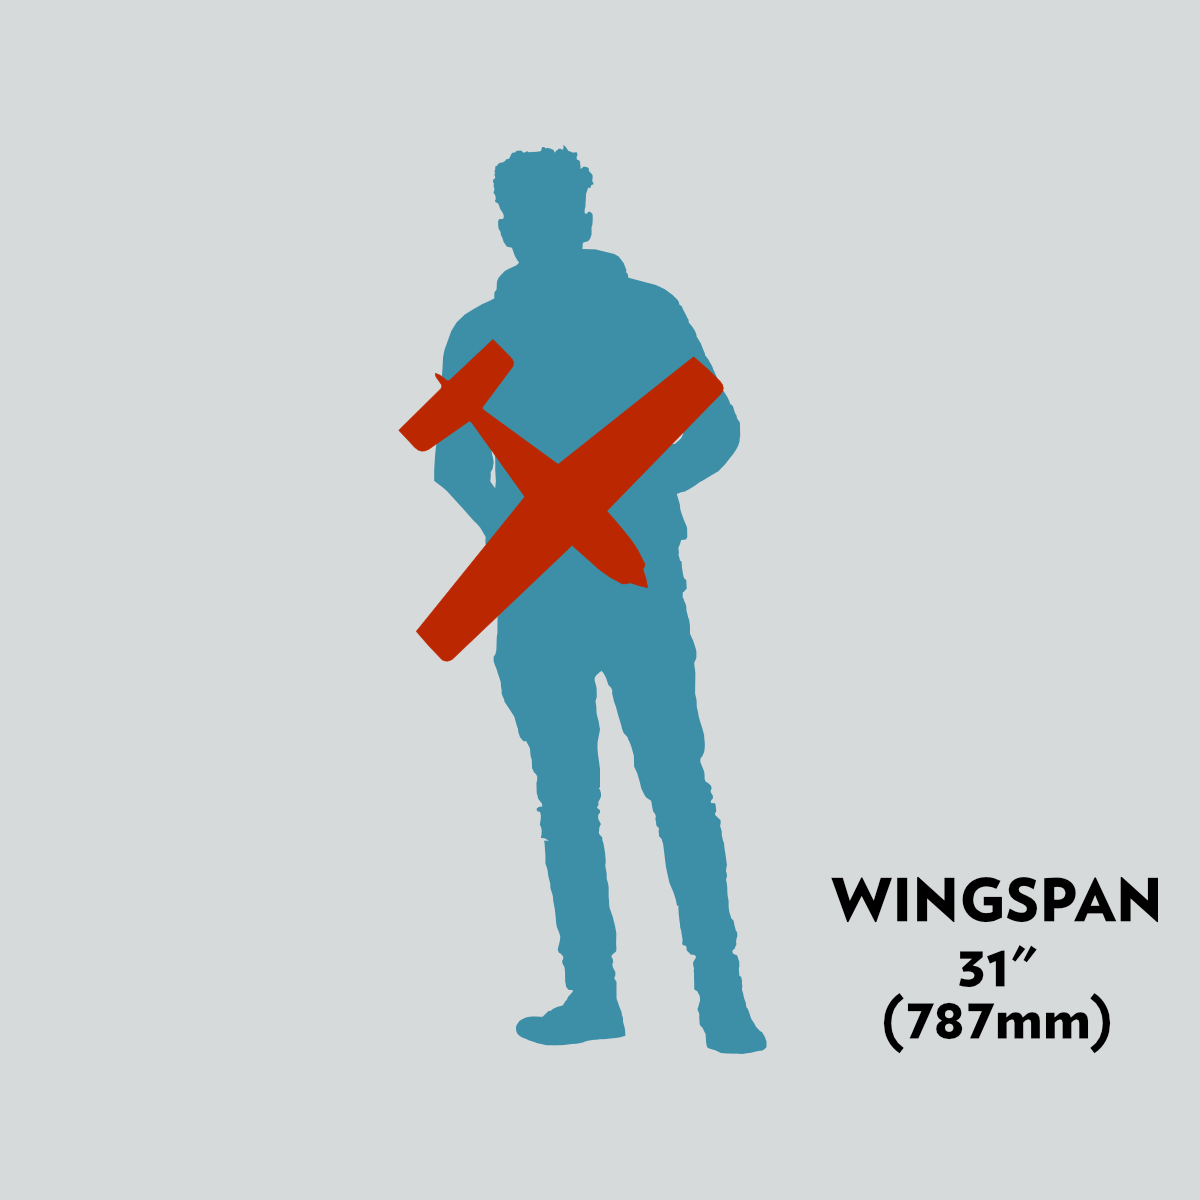 31" (787mm) wingspan